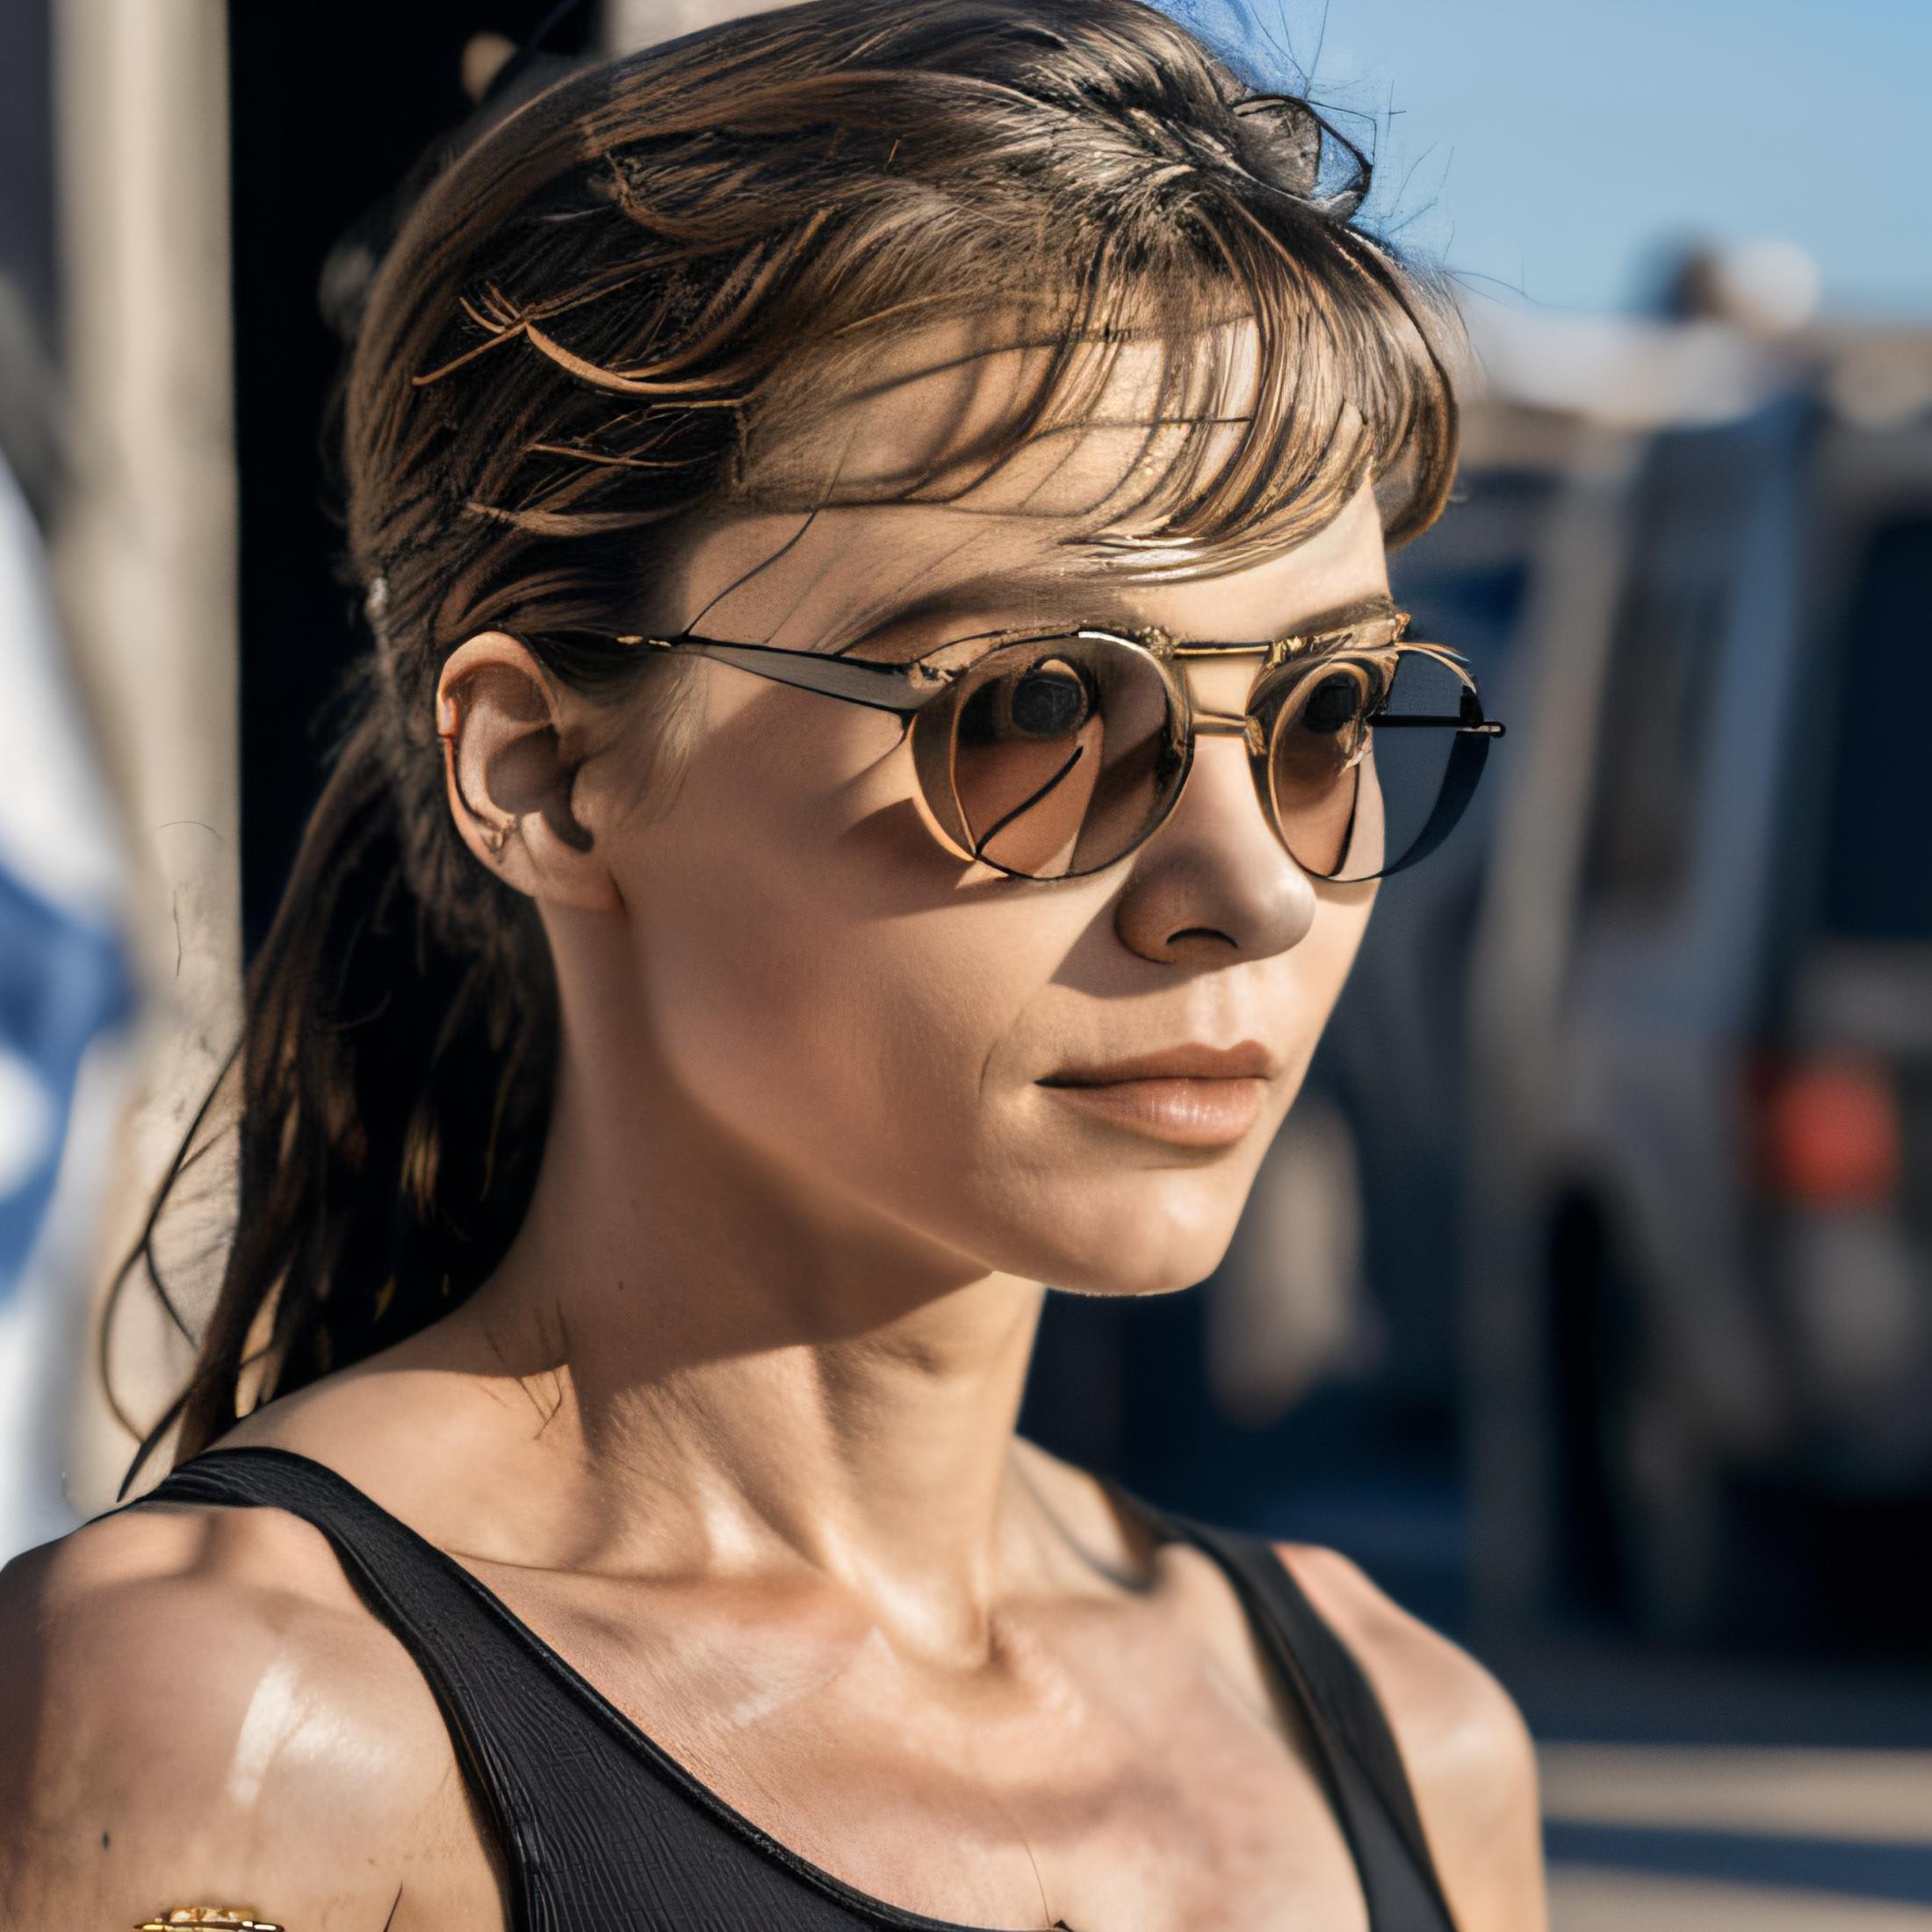 Sarah Connor | Terminator 2 image by Lorafy_Off